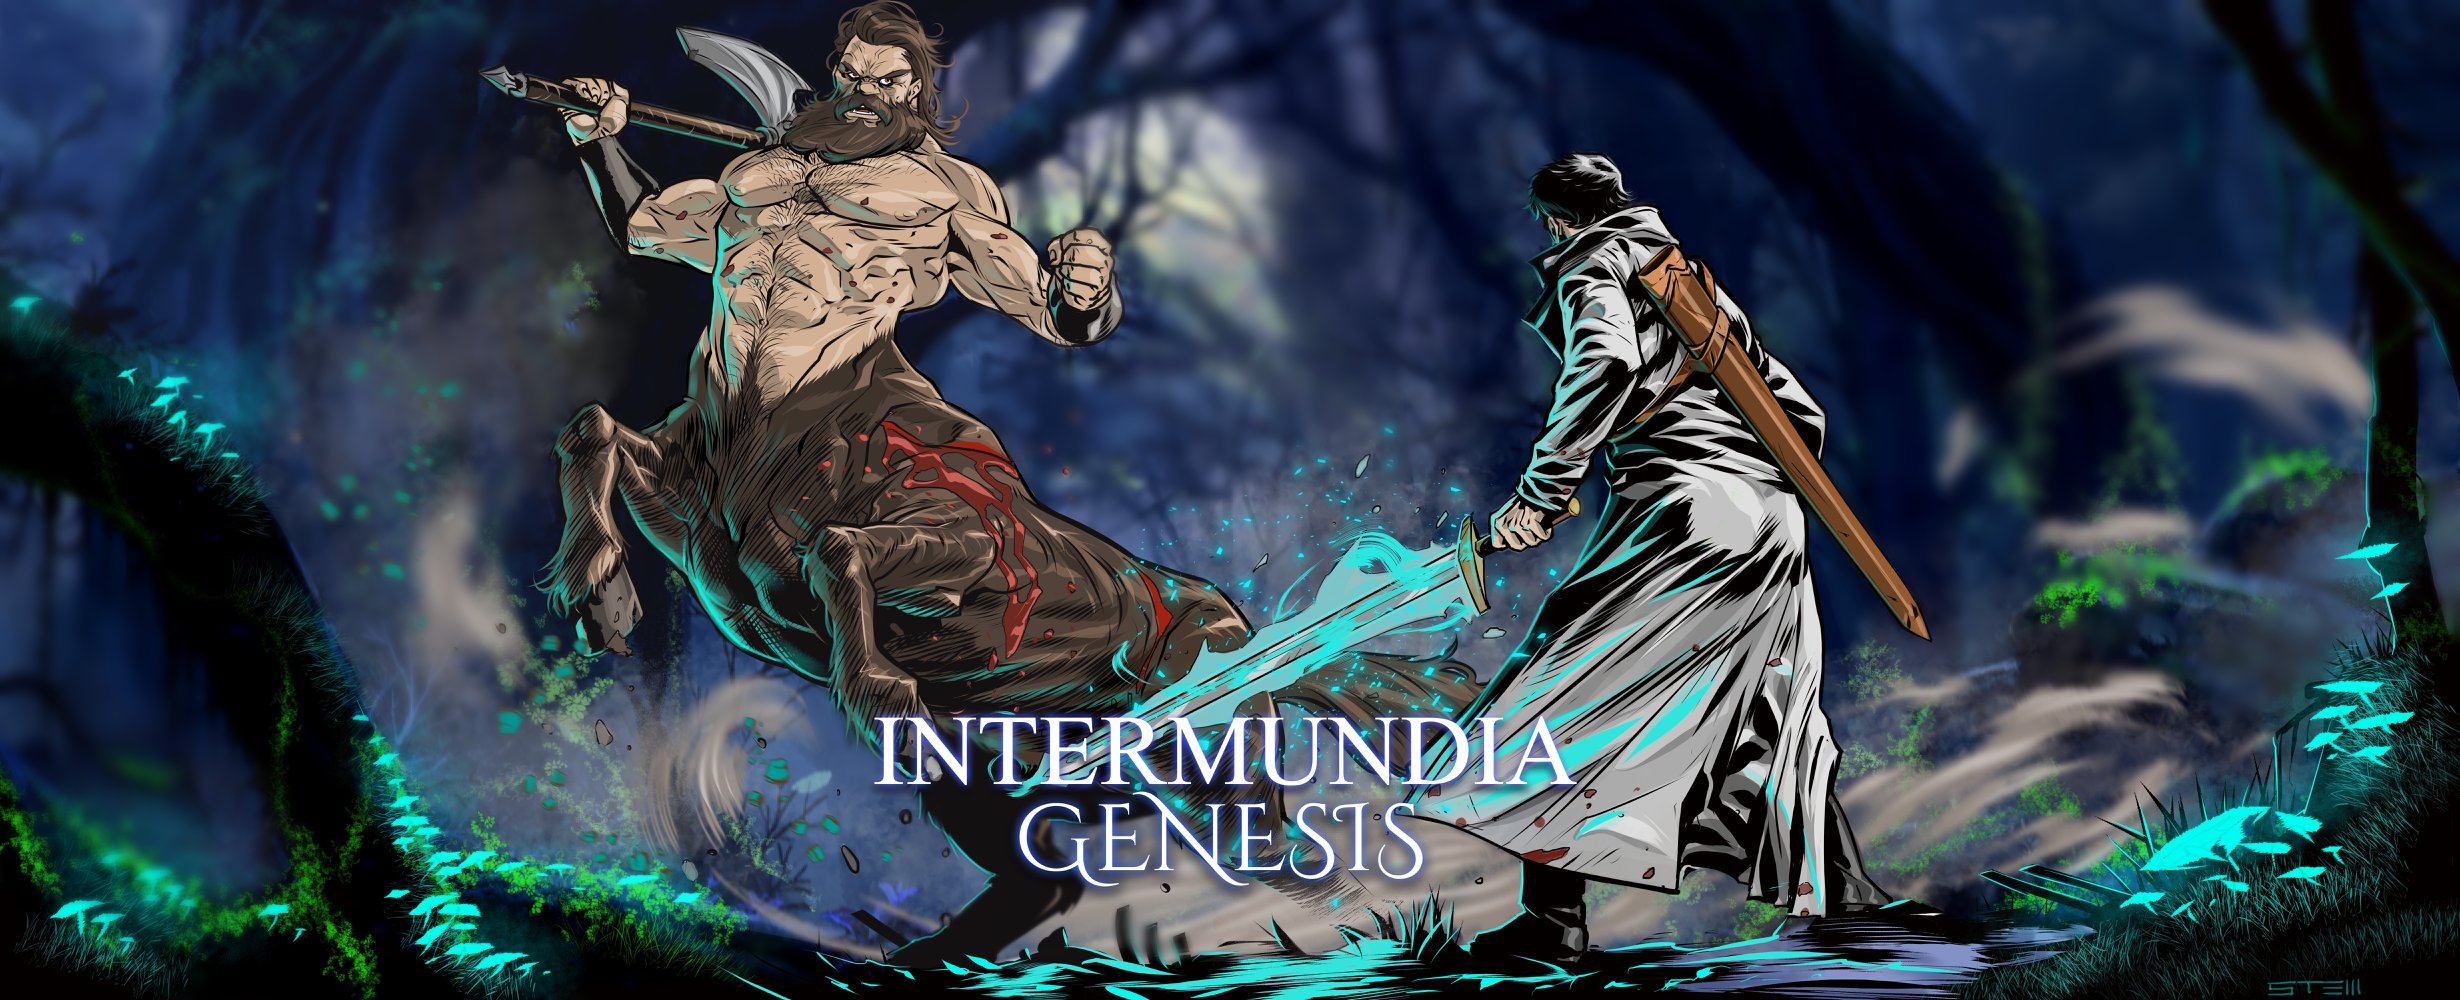 Intermundia Genesis: intervista a Giorgio Catania thumbnail